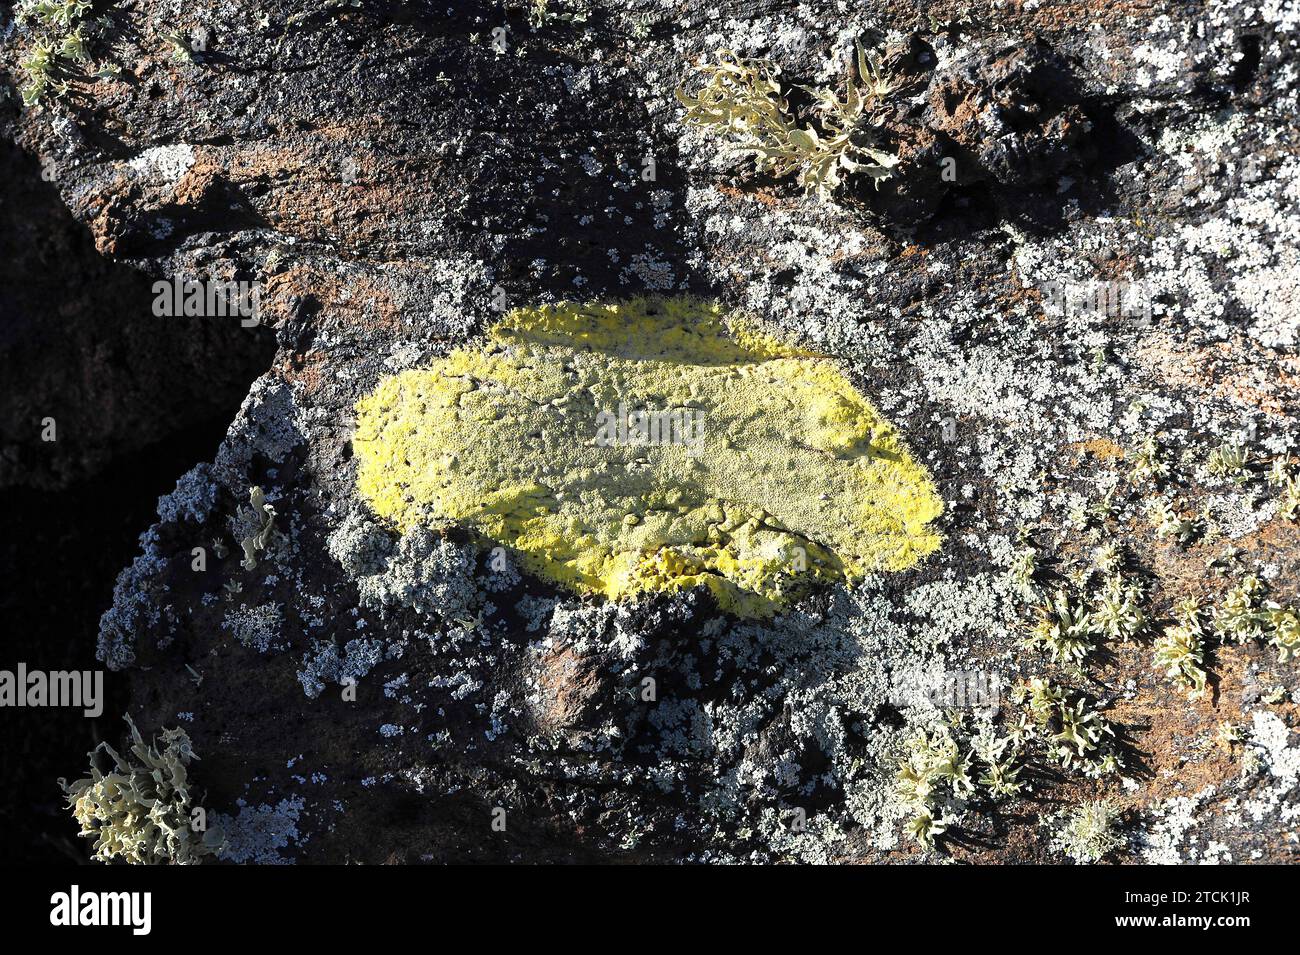 Pertusaria rupicola or Pertusaria sulphurea is a crustose lichen. This photo was taken in Lanzarote Island, Canary Islands, Spain. Stock Photo